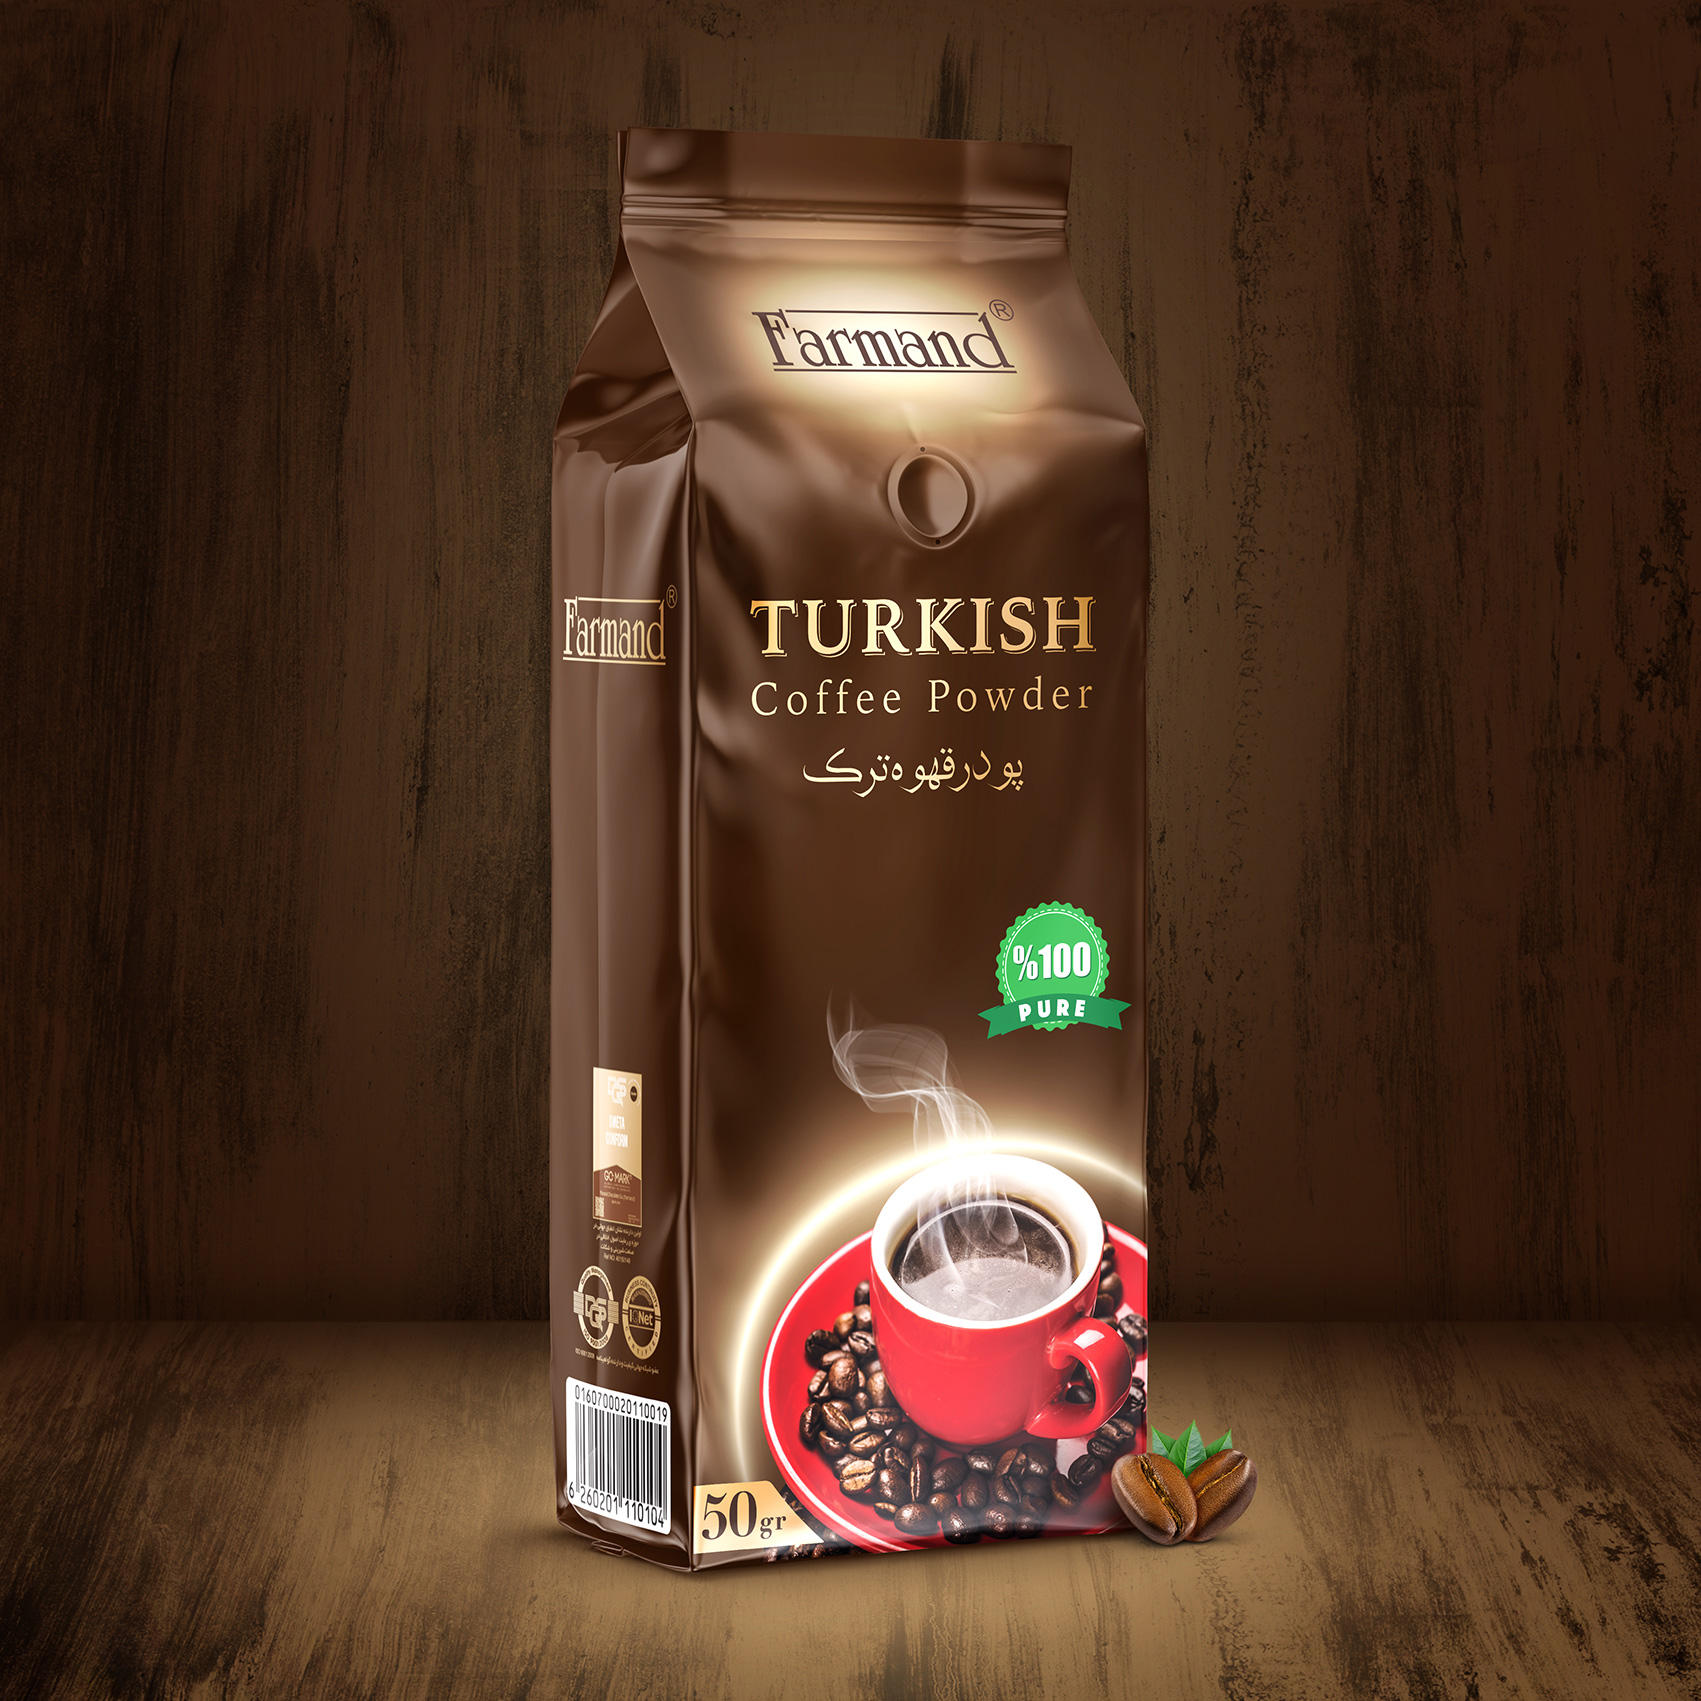 Farmand Coffee Powder Packaging Design - World Brand Design Society